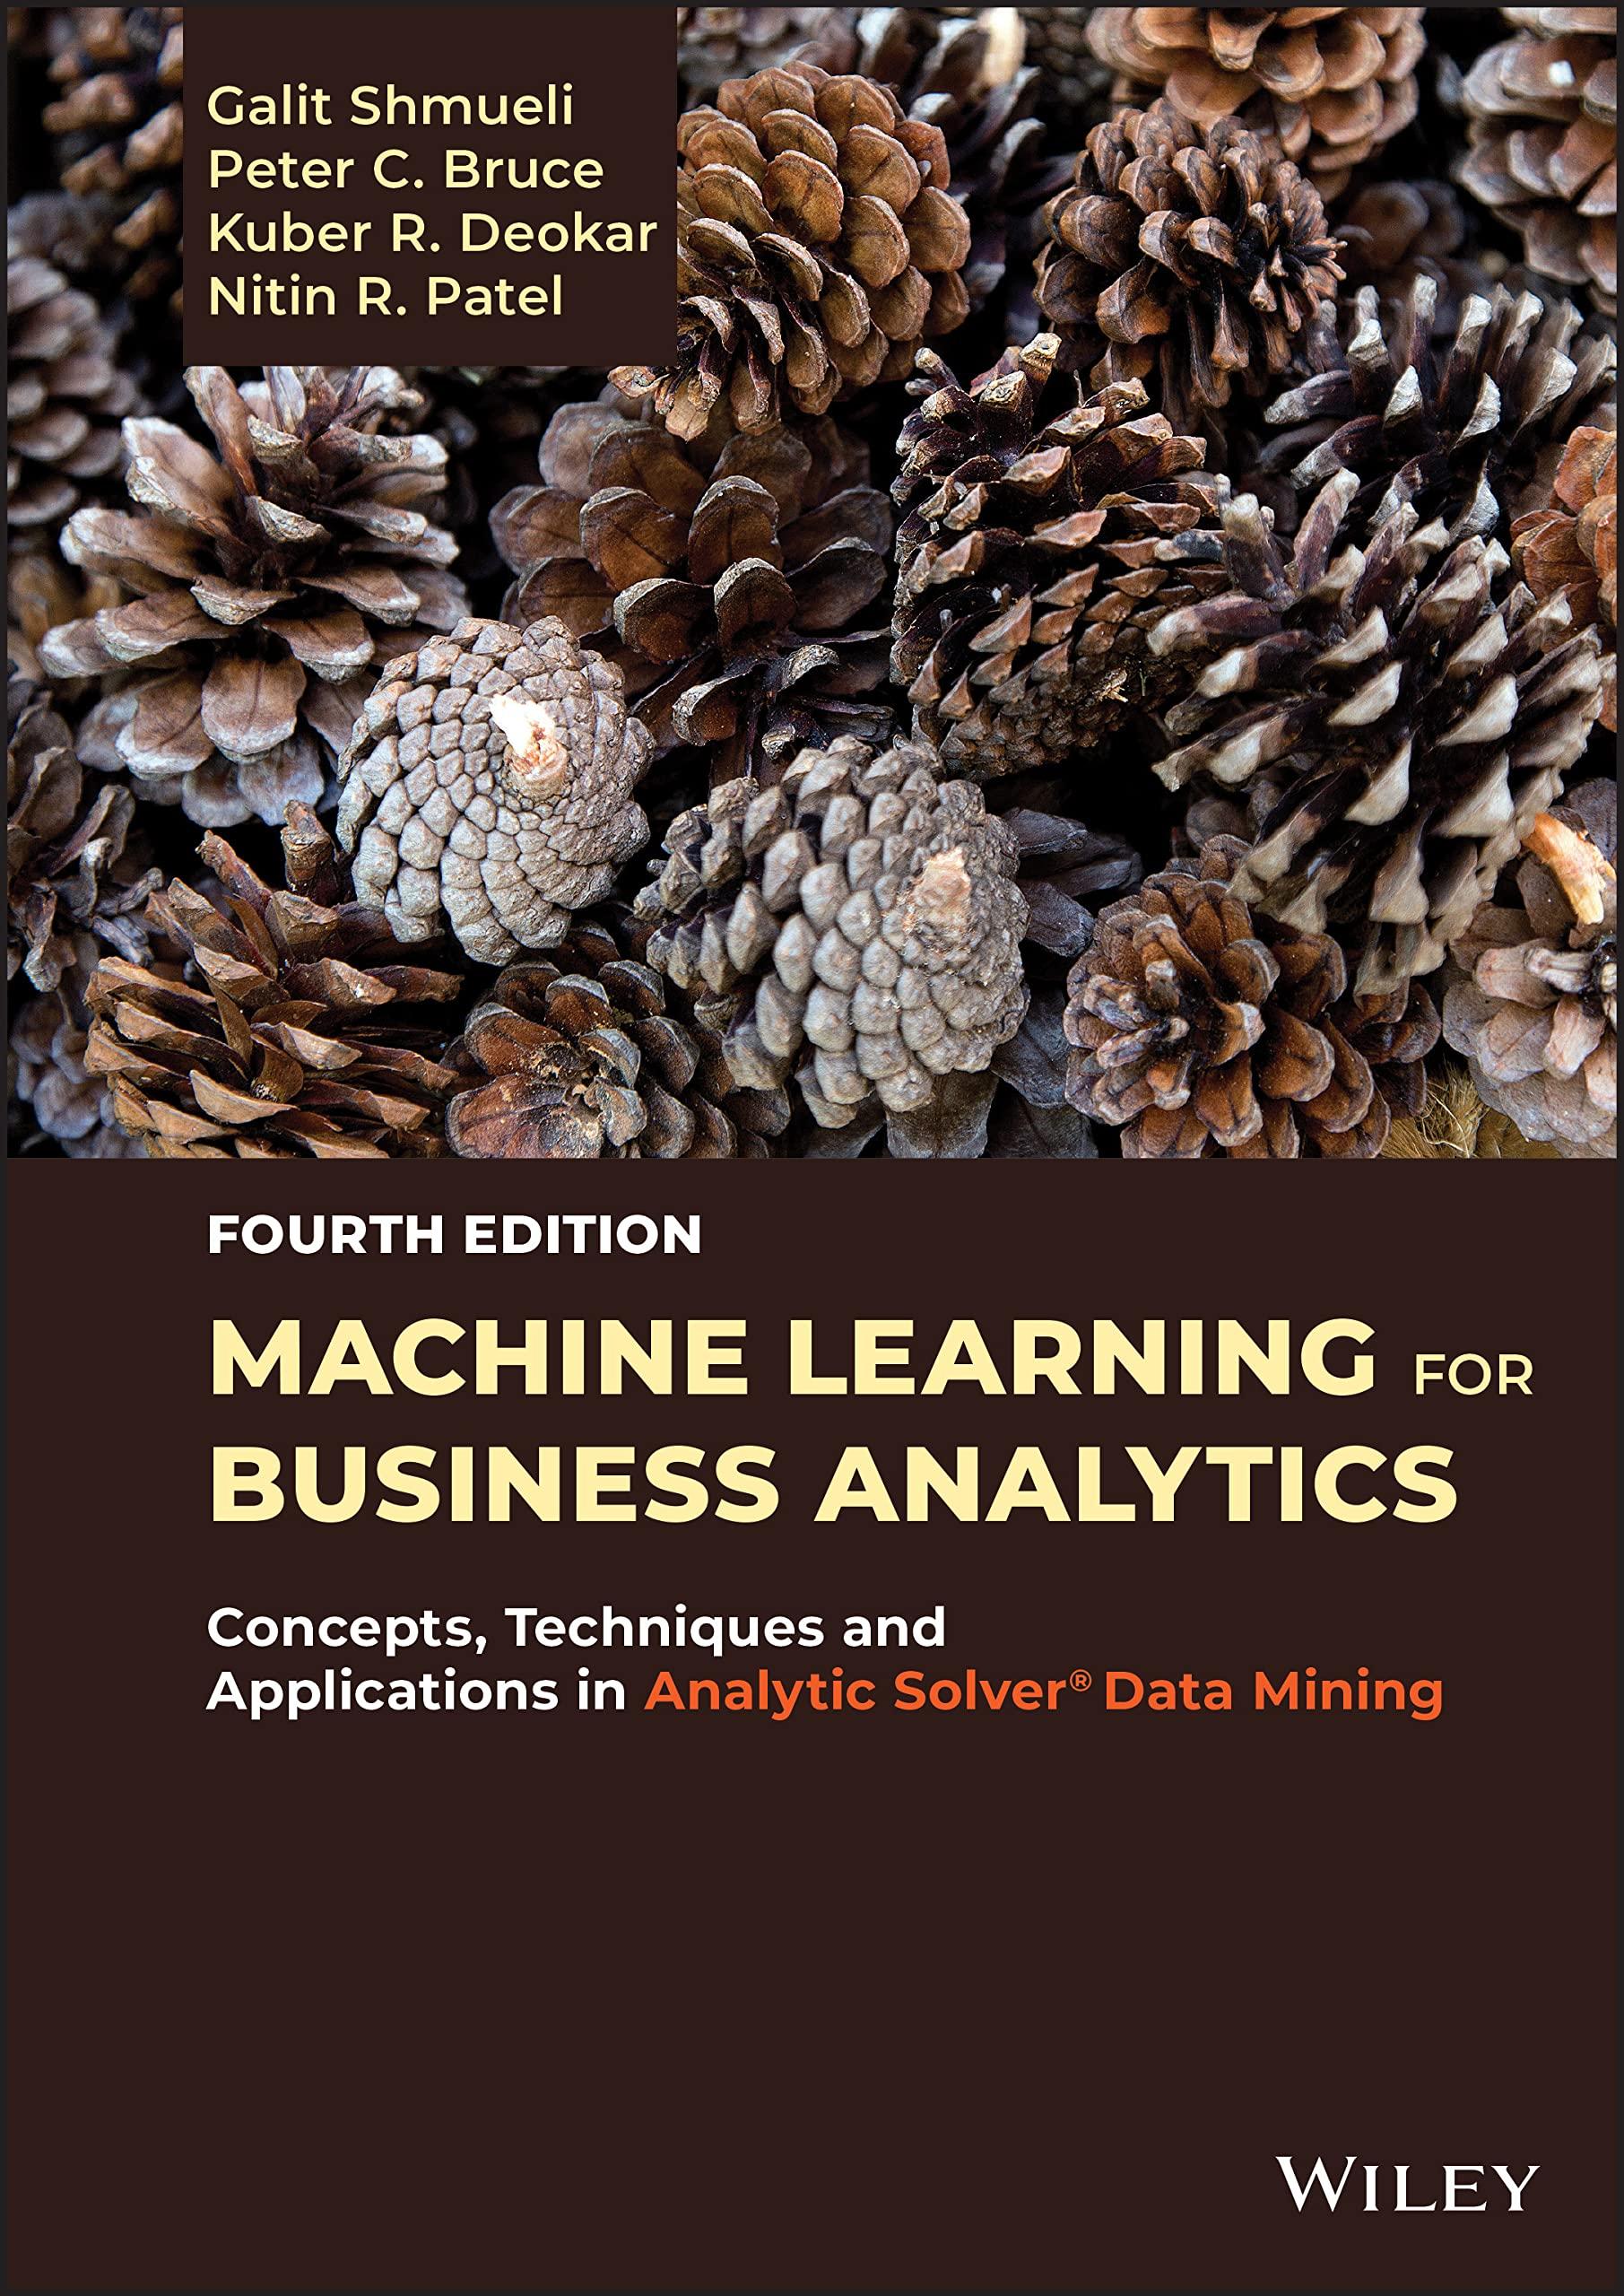 machine learning for business analytics 4th edition galit shmueli, peter c. bruce, kuber r. deokar, nitin r.